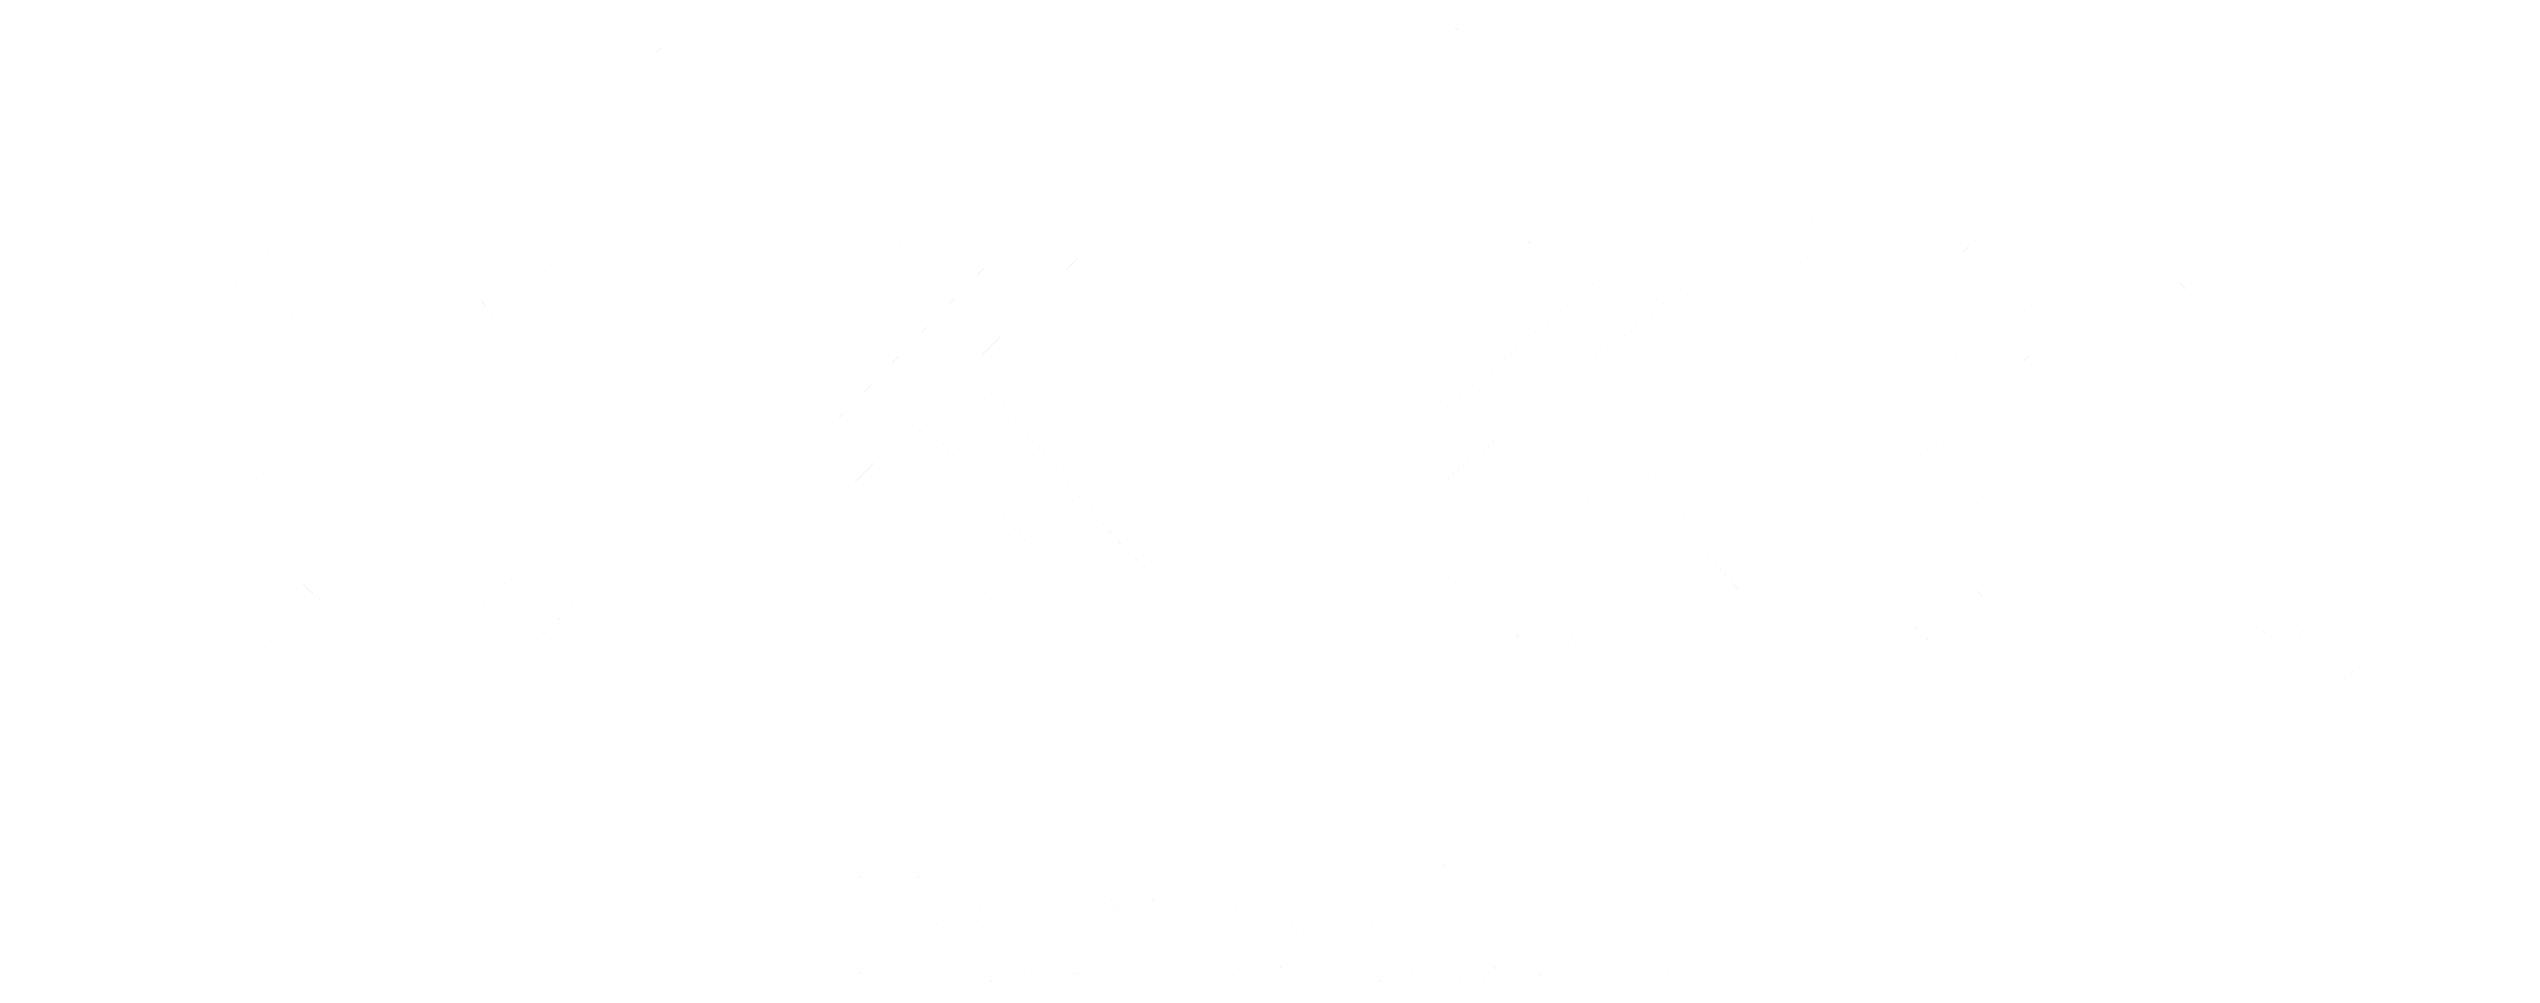 Hair Salon ekka【美容室エッカ】